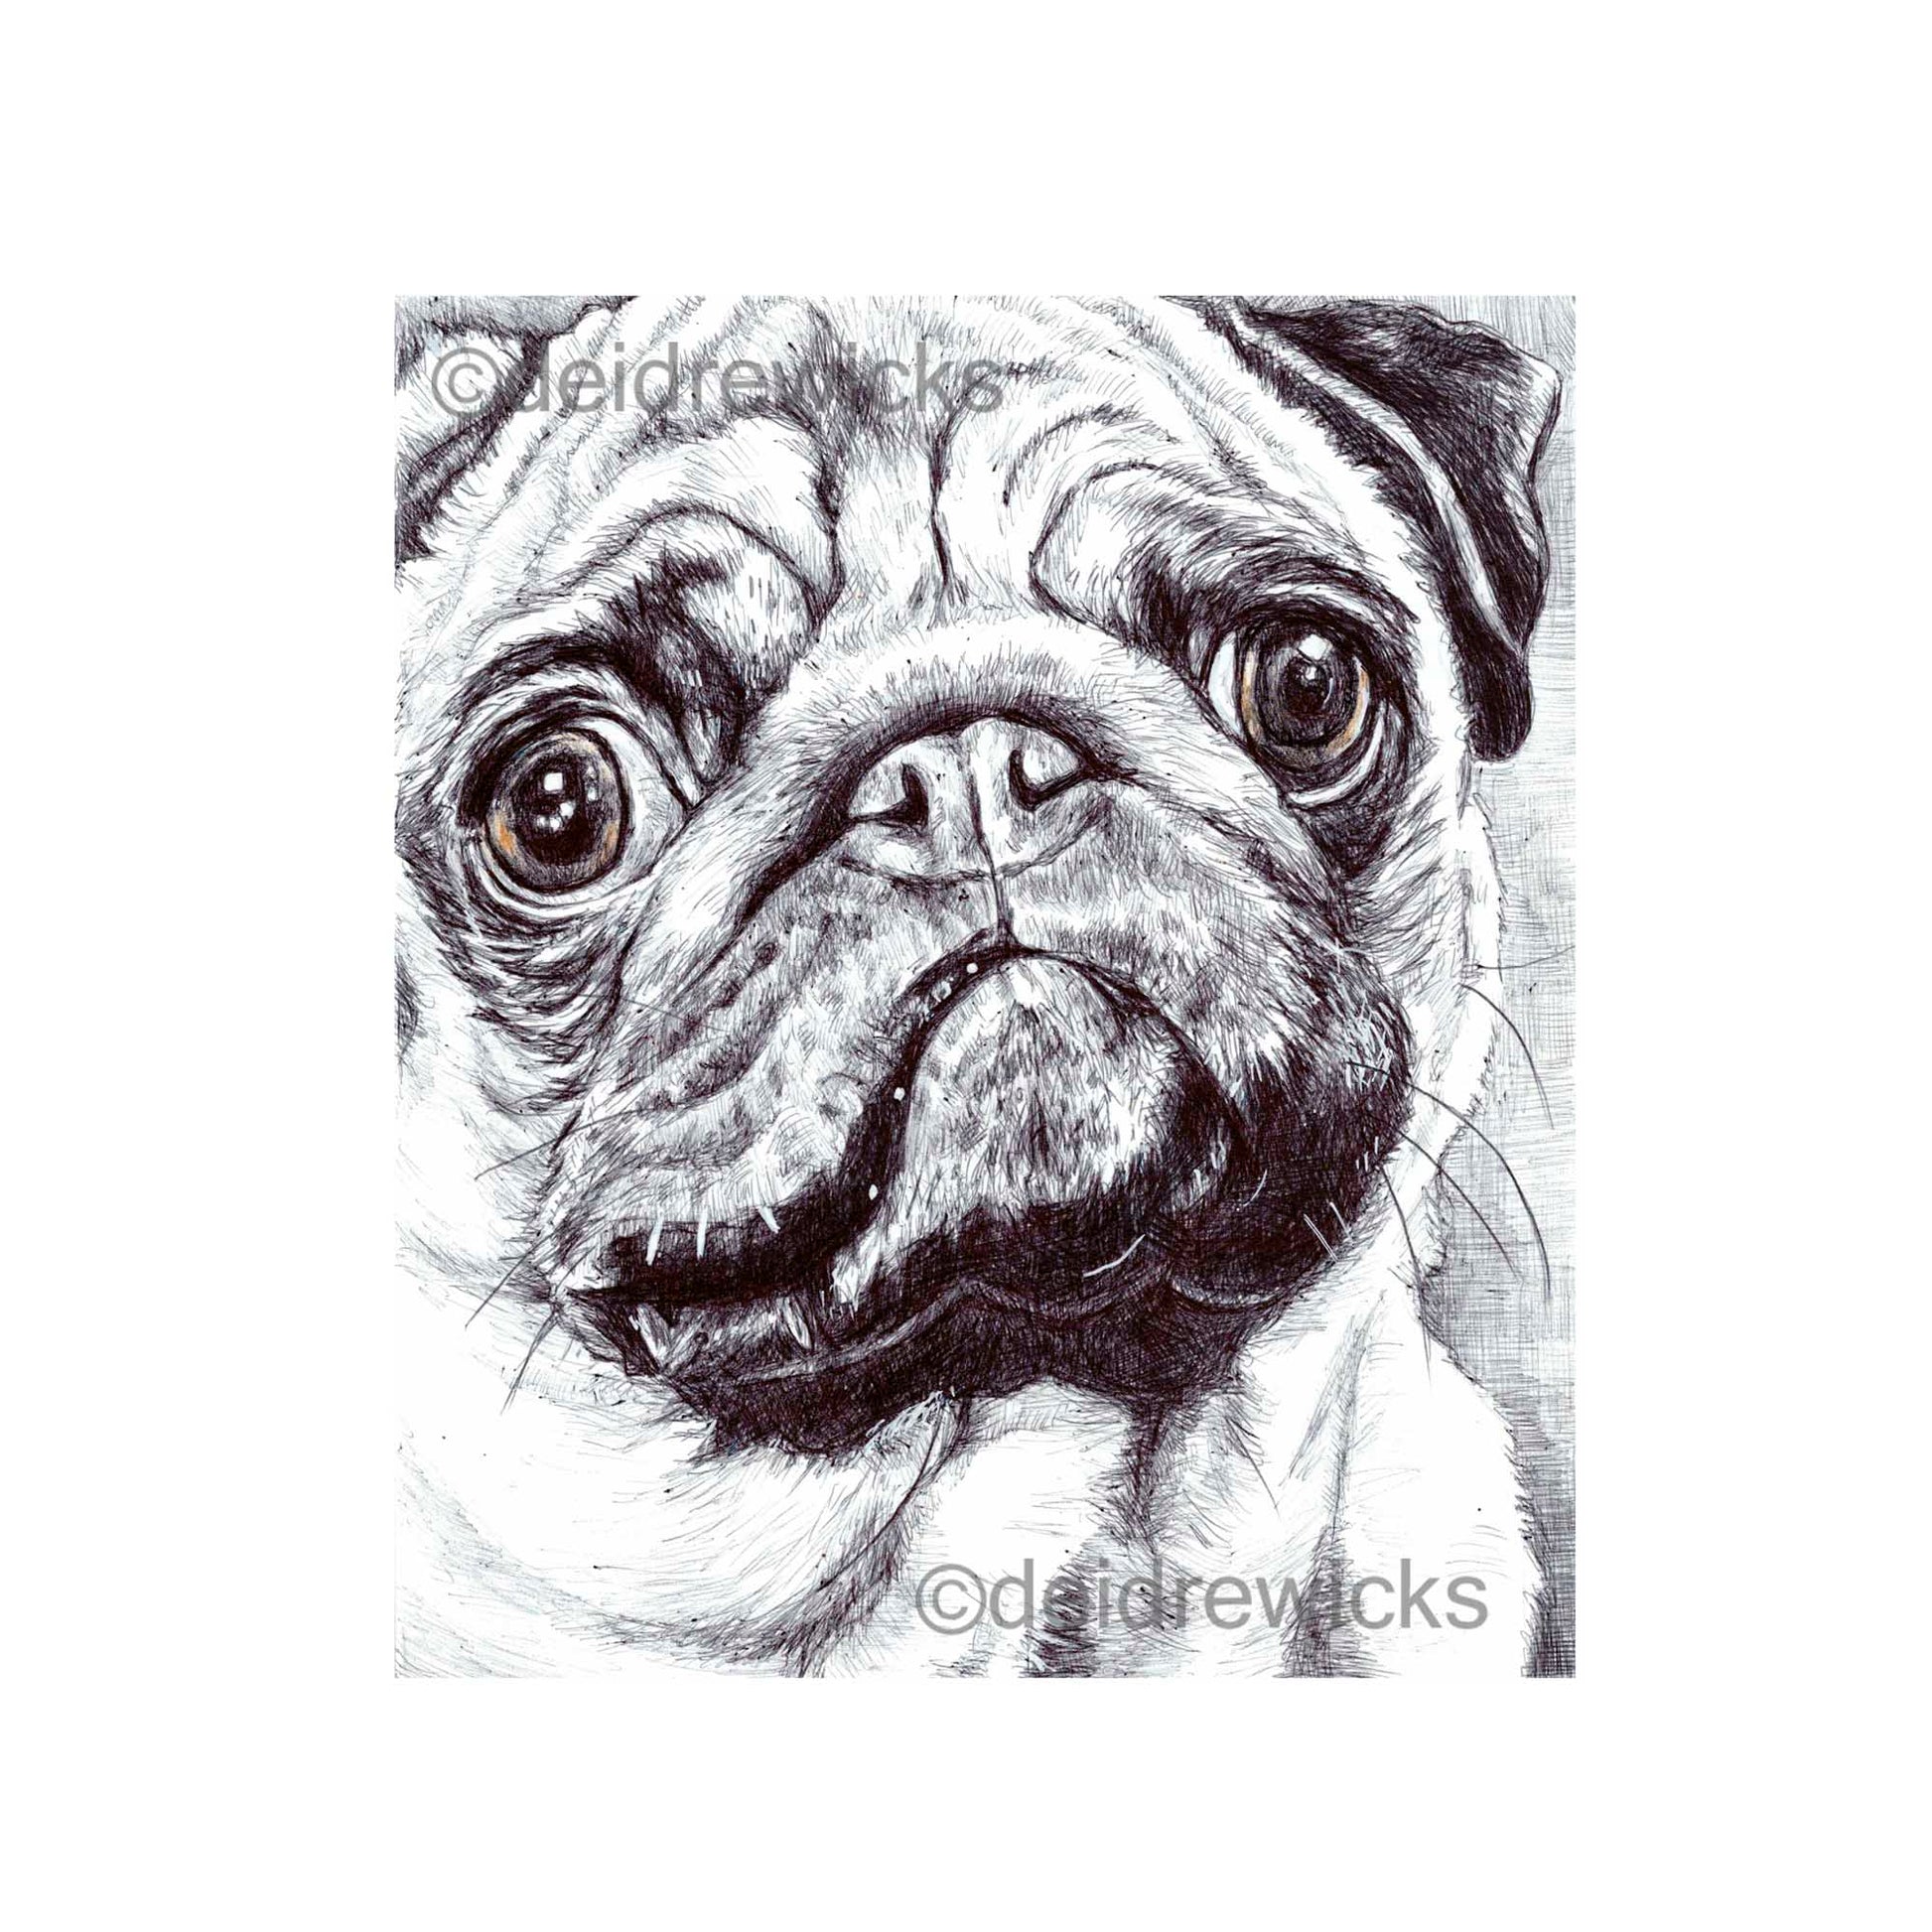 Ballpoint pen illustration of a close up of an adorable pug dog. Art by Deidre Wicks